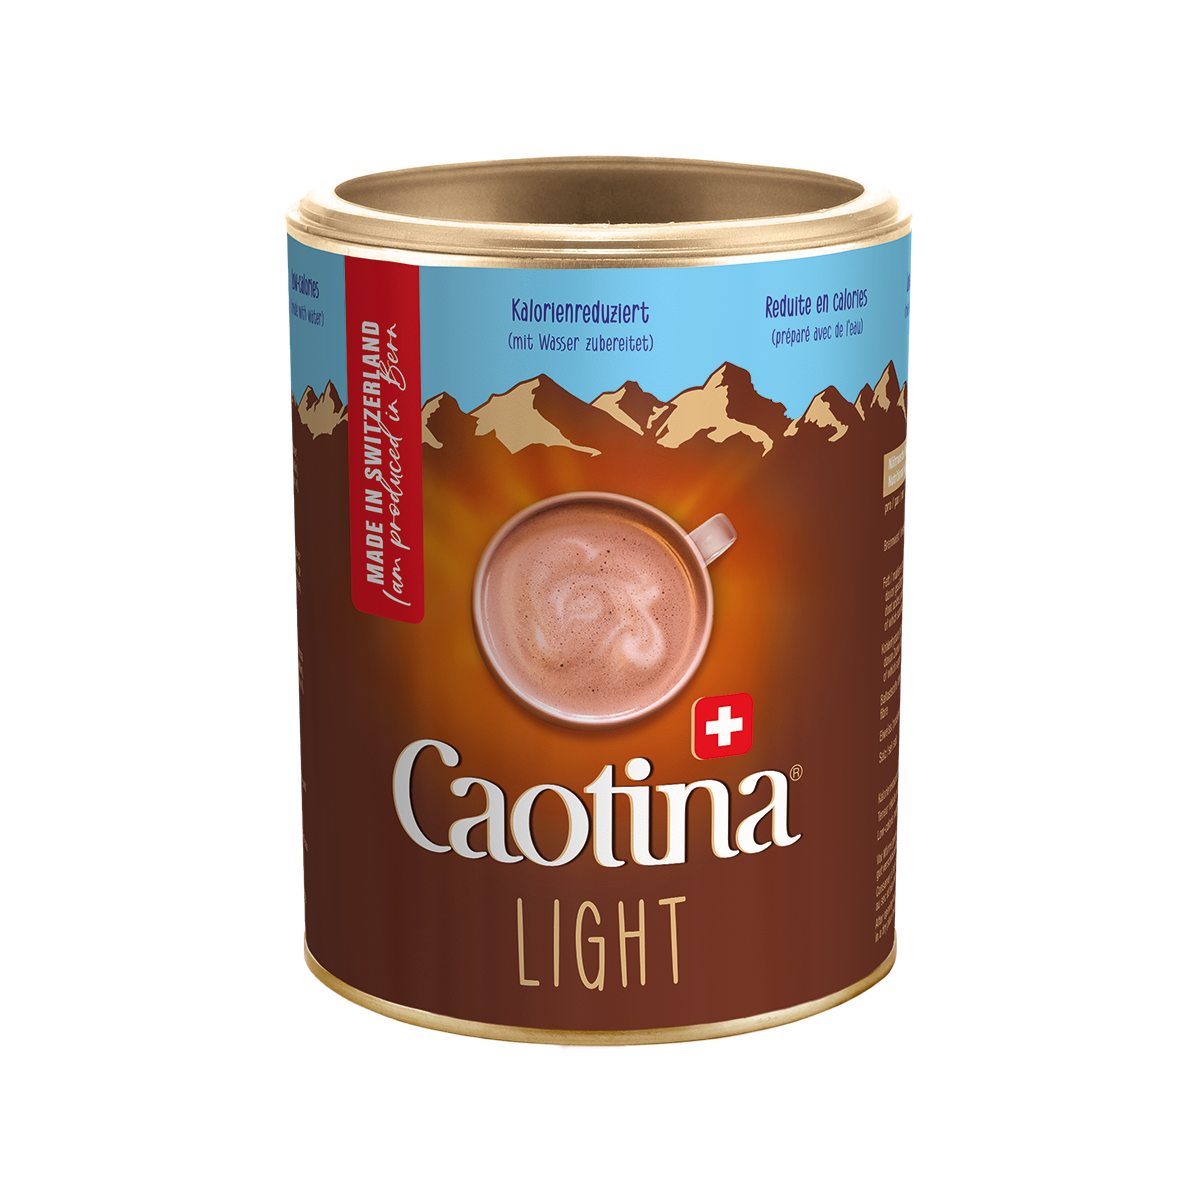  Caotina Light - Kakaogetränk für Diabetiker